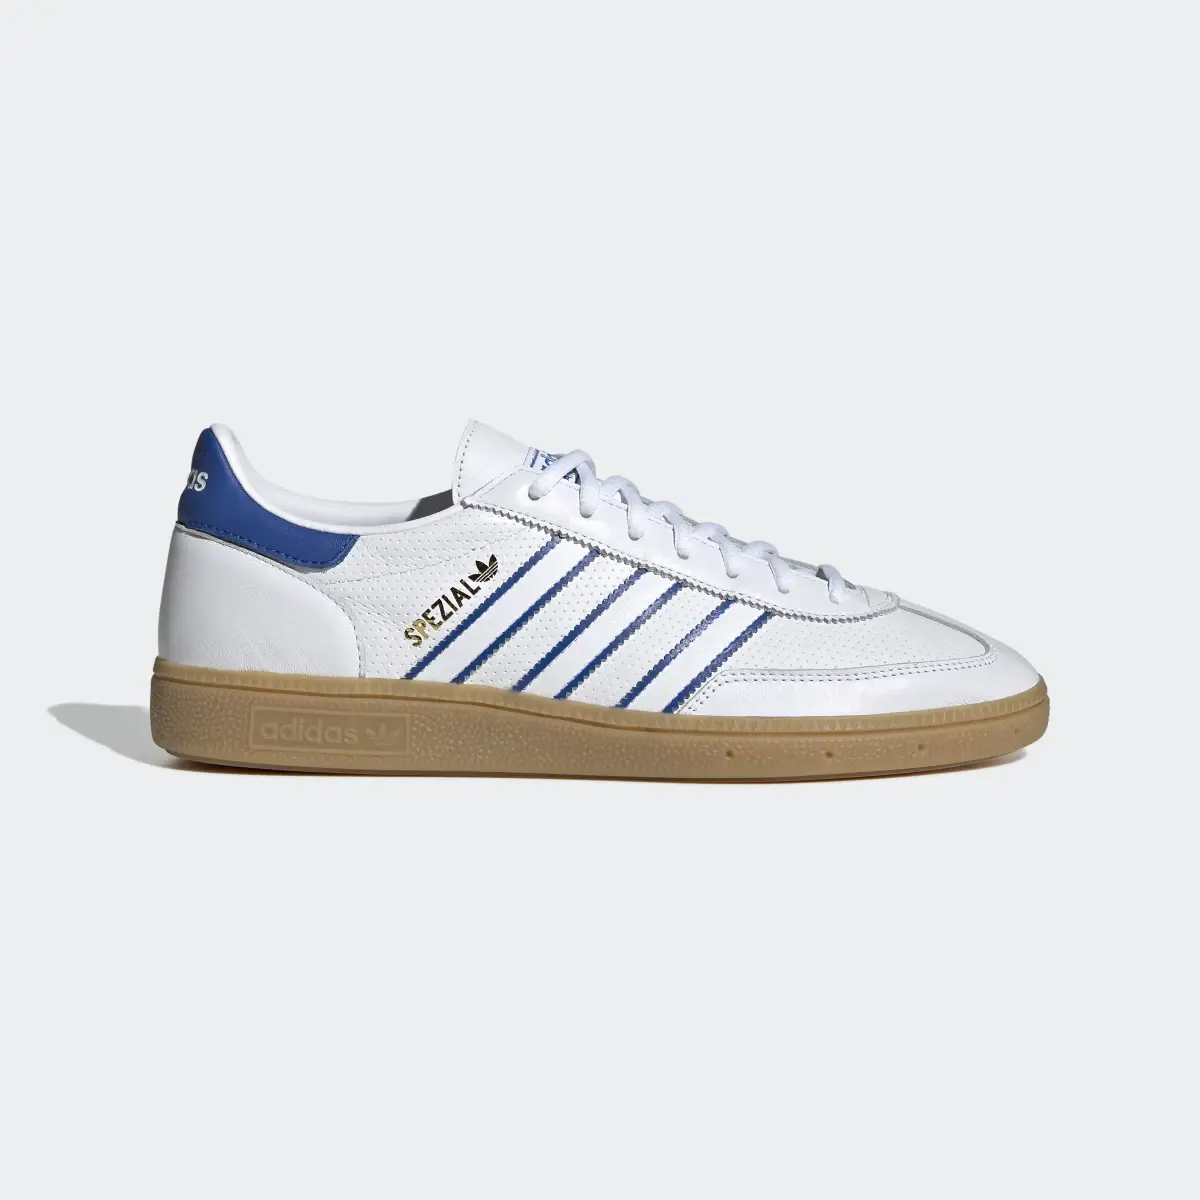 Adidas Handball Spezial Shoes. 2